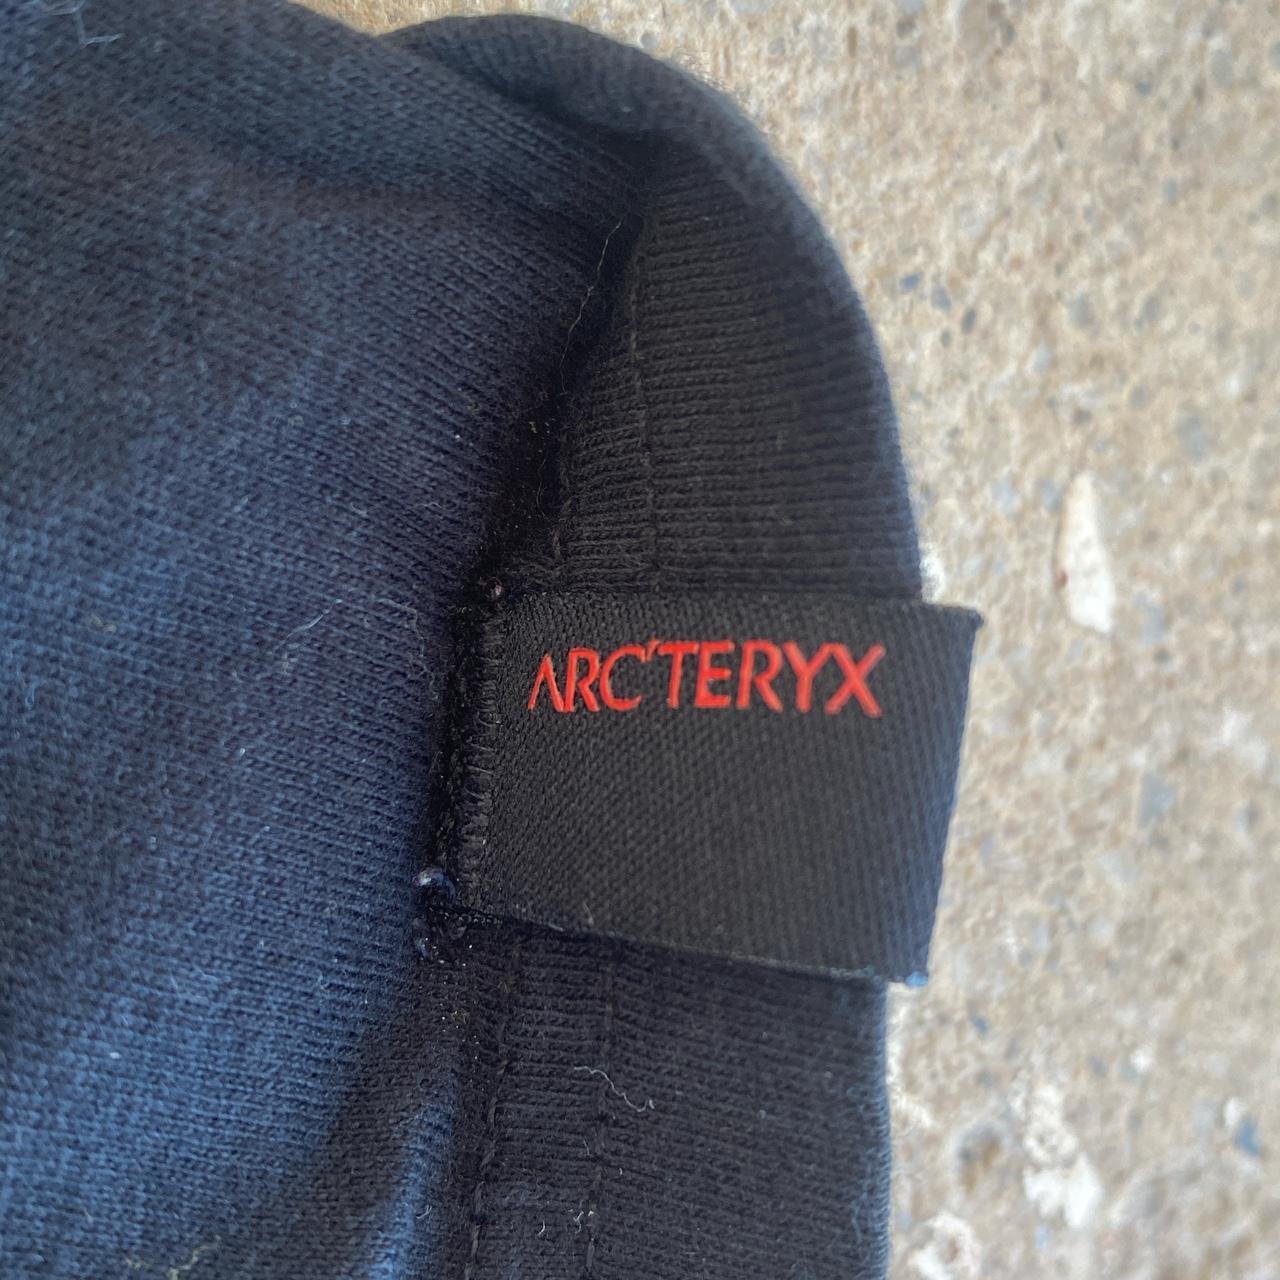 Arc’Teryx Shirt Excellent Condition Some letters... - Depop